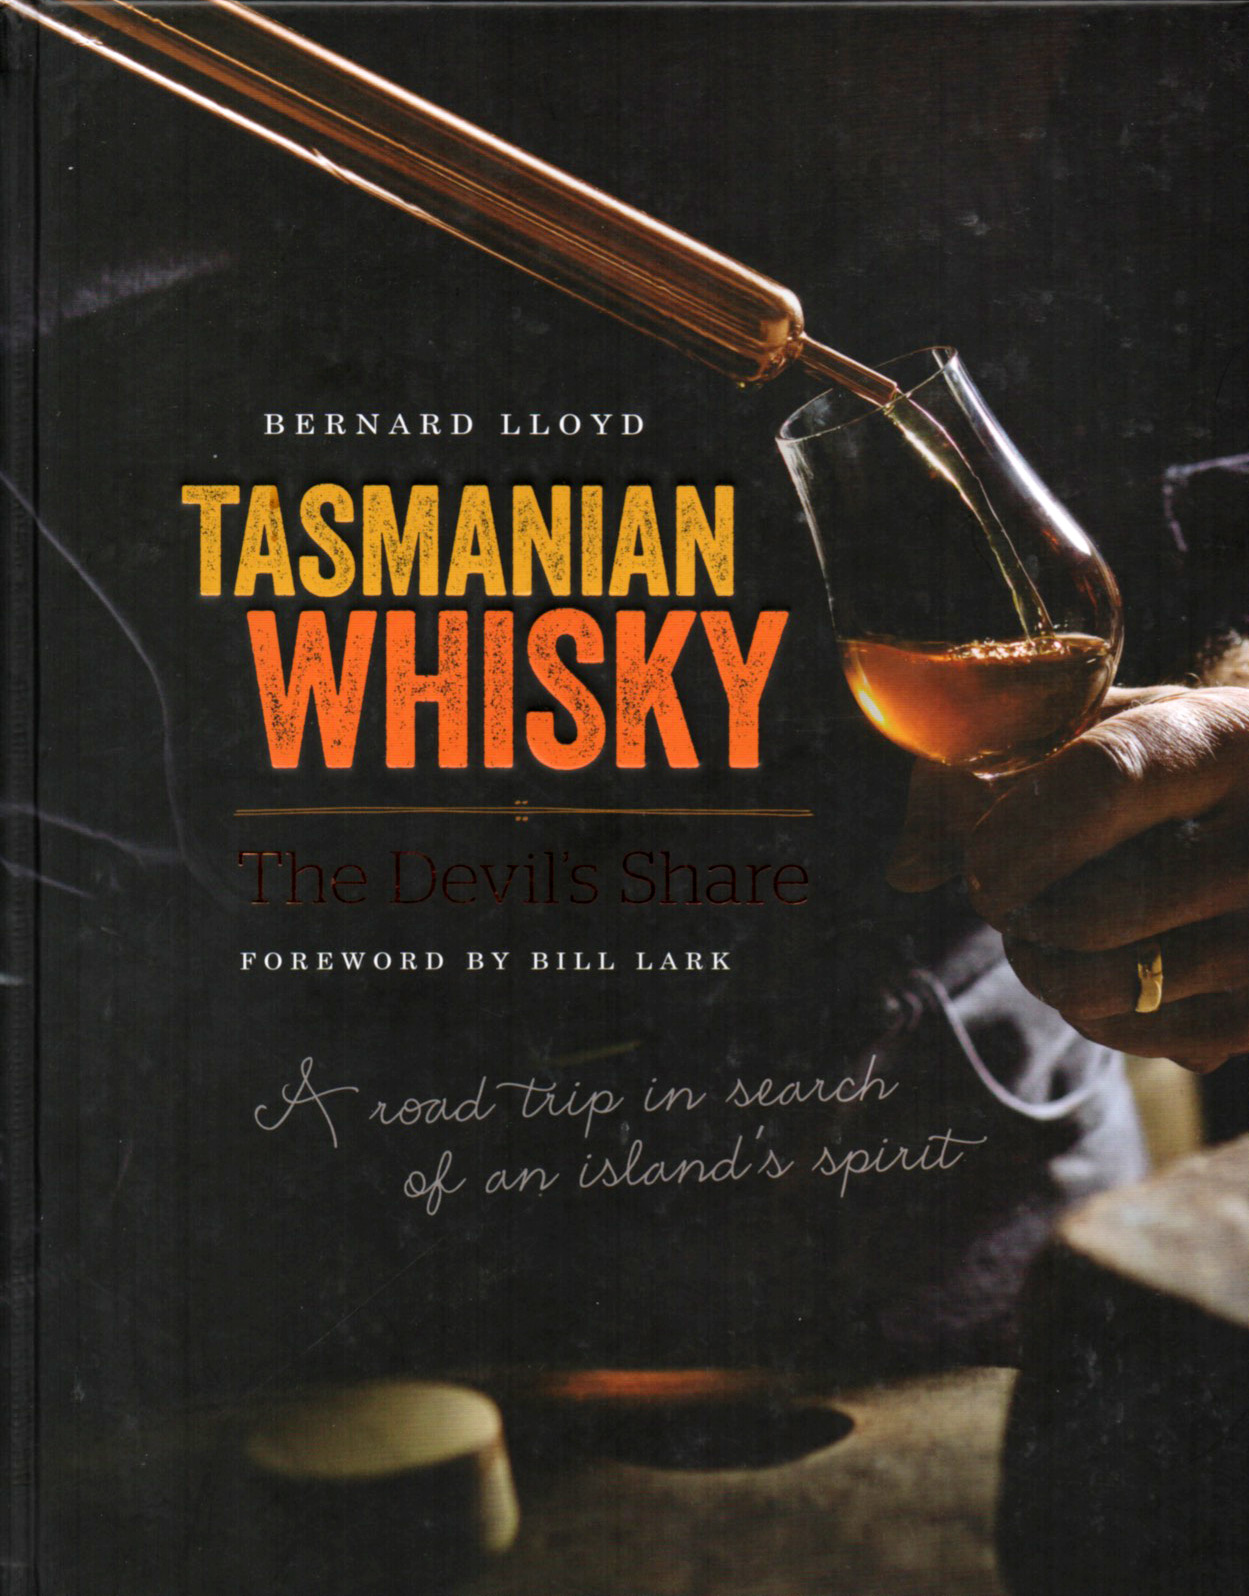 Tasmanian Whisky - the Devil's Share